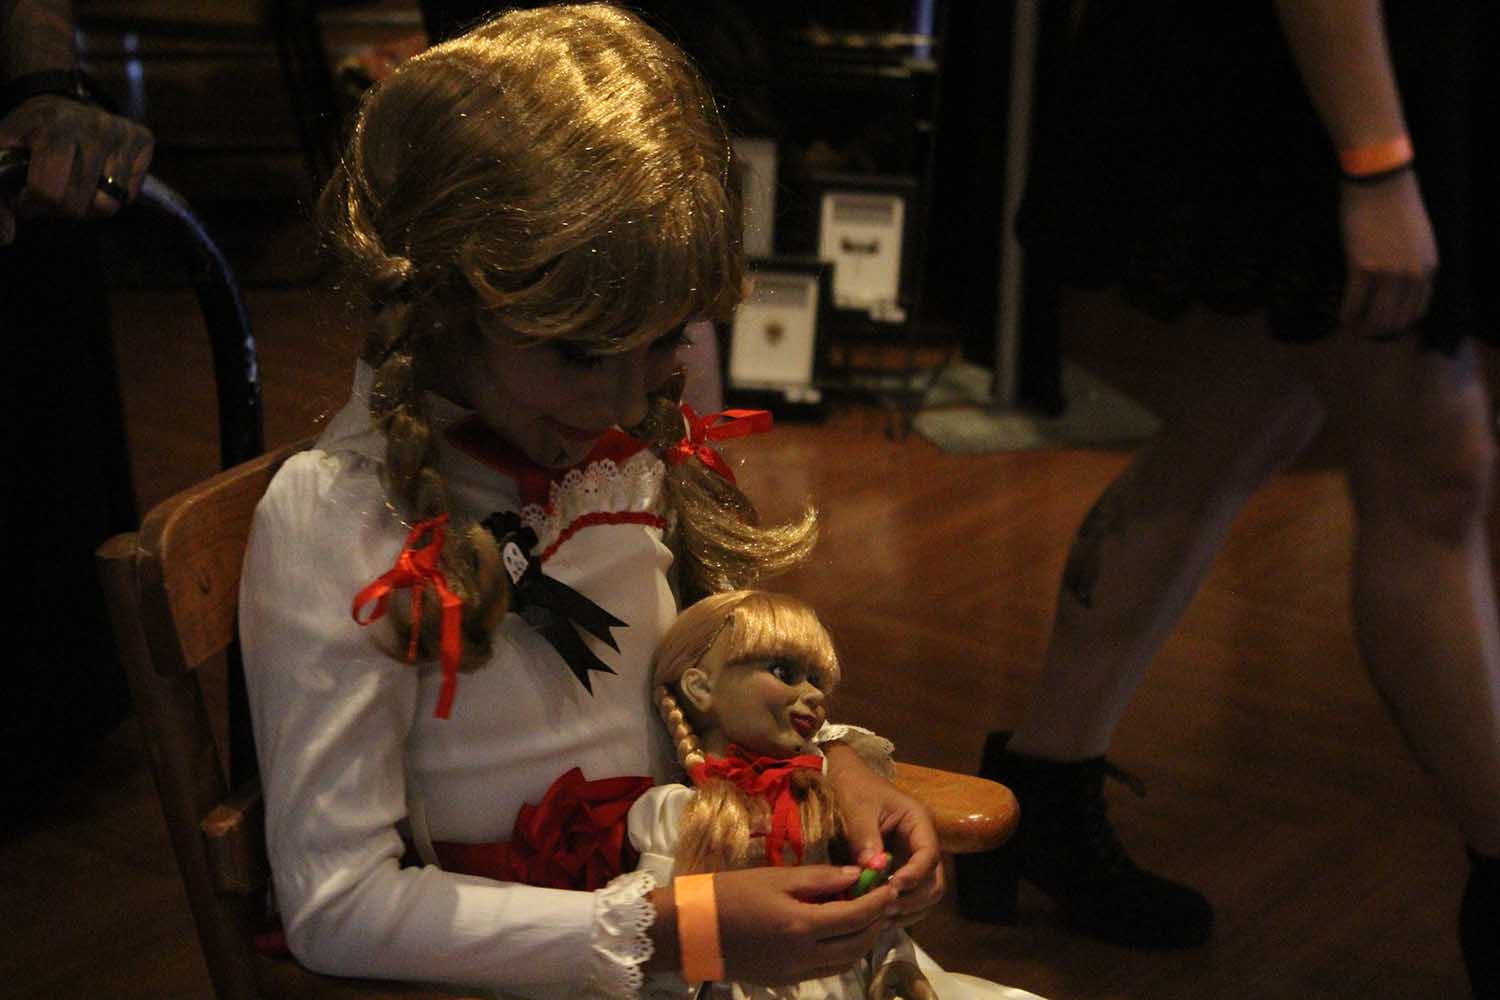 Annabelle doll child cosplayer